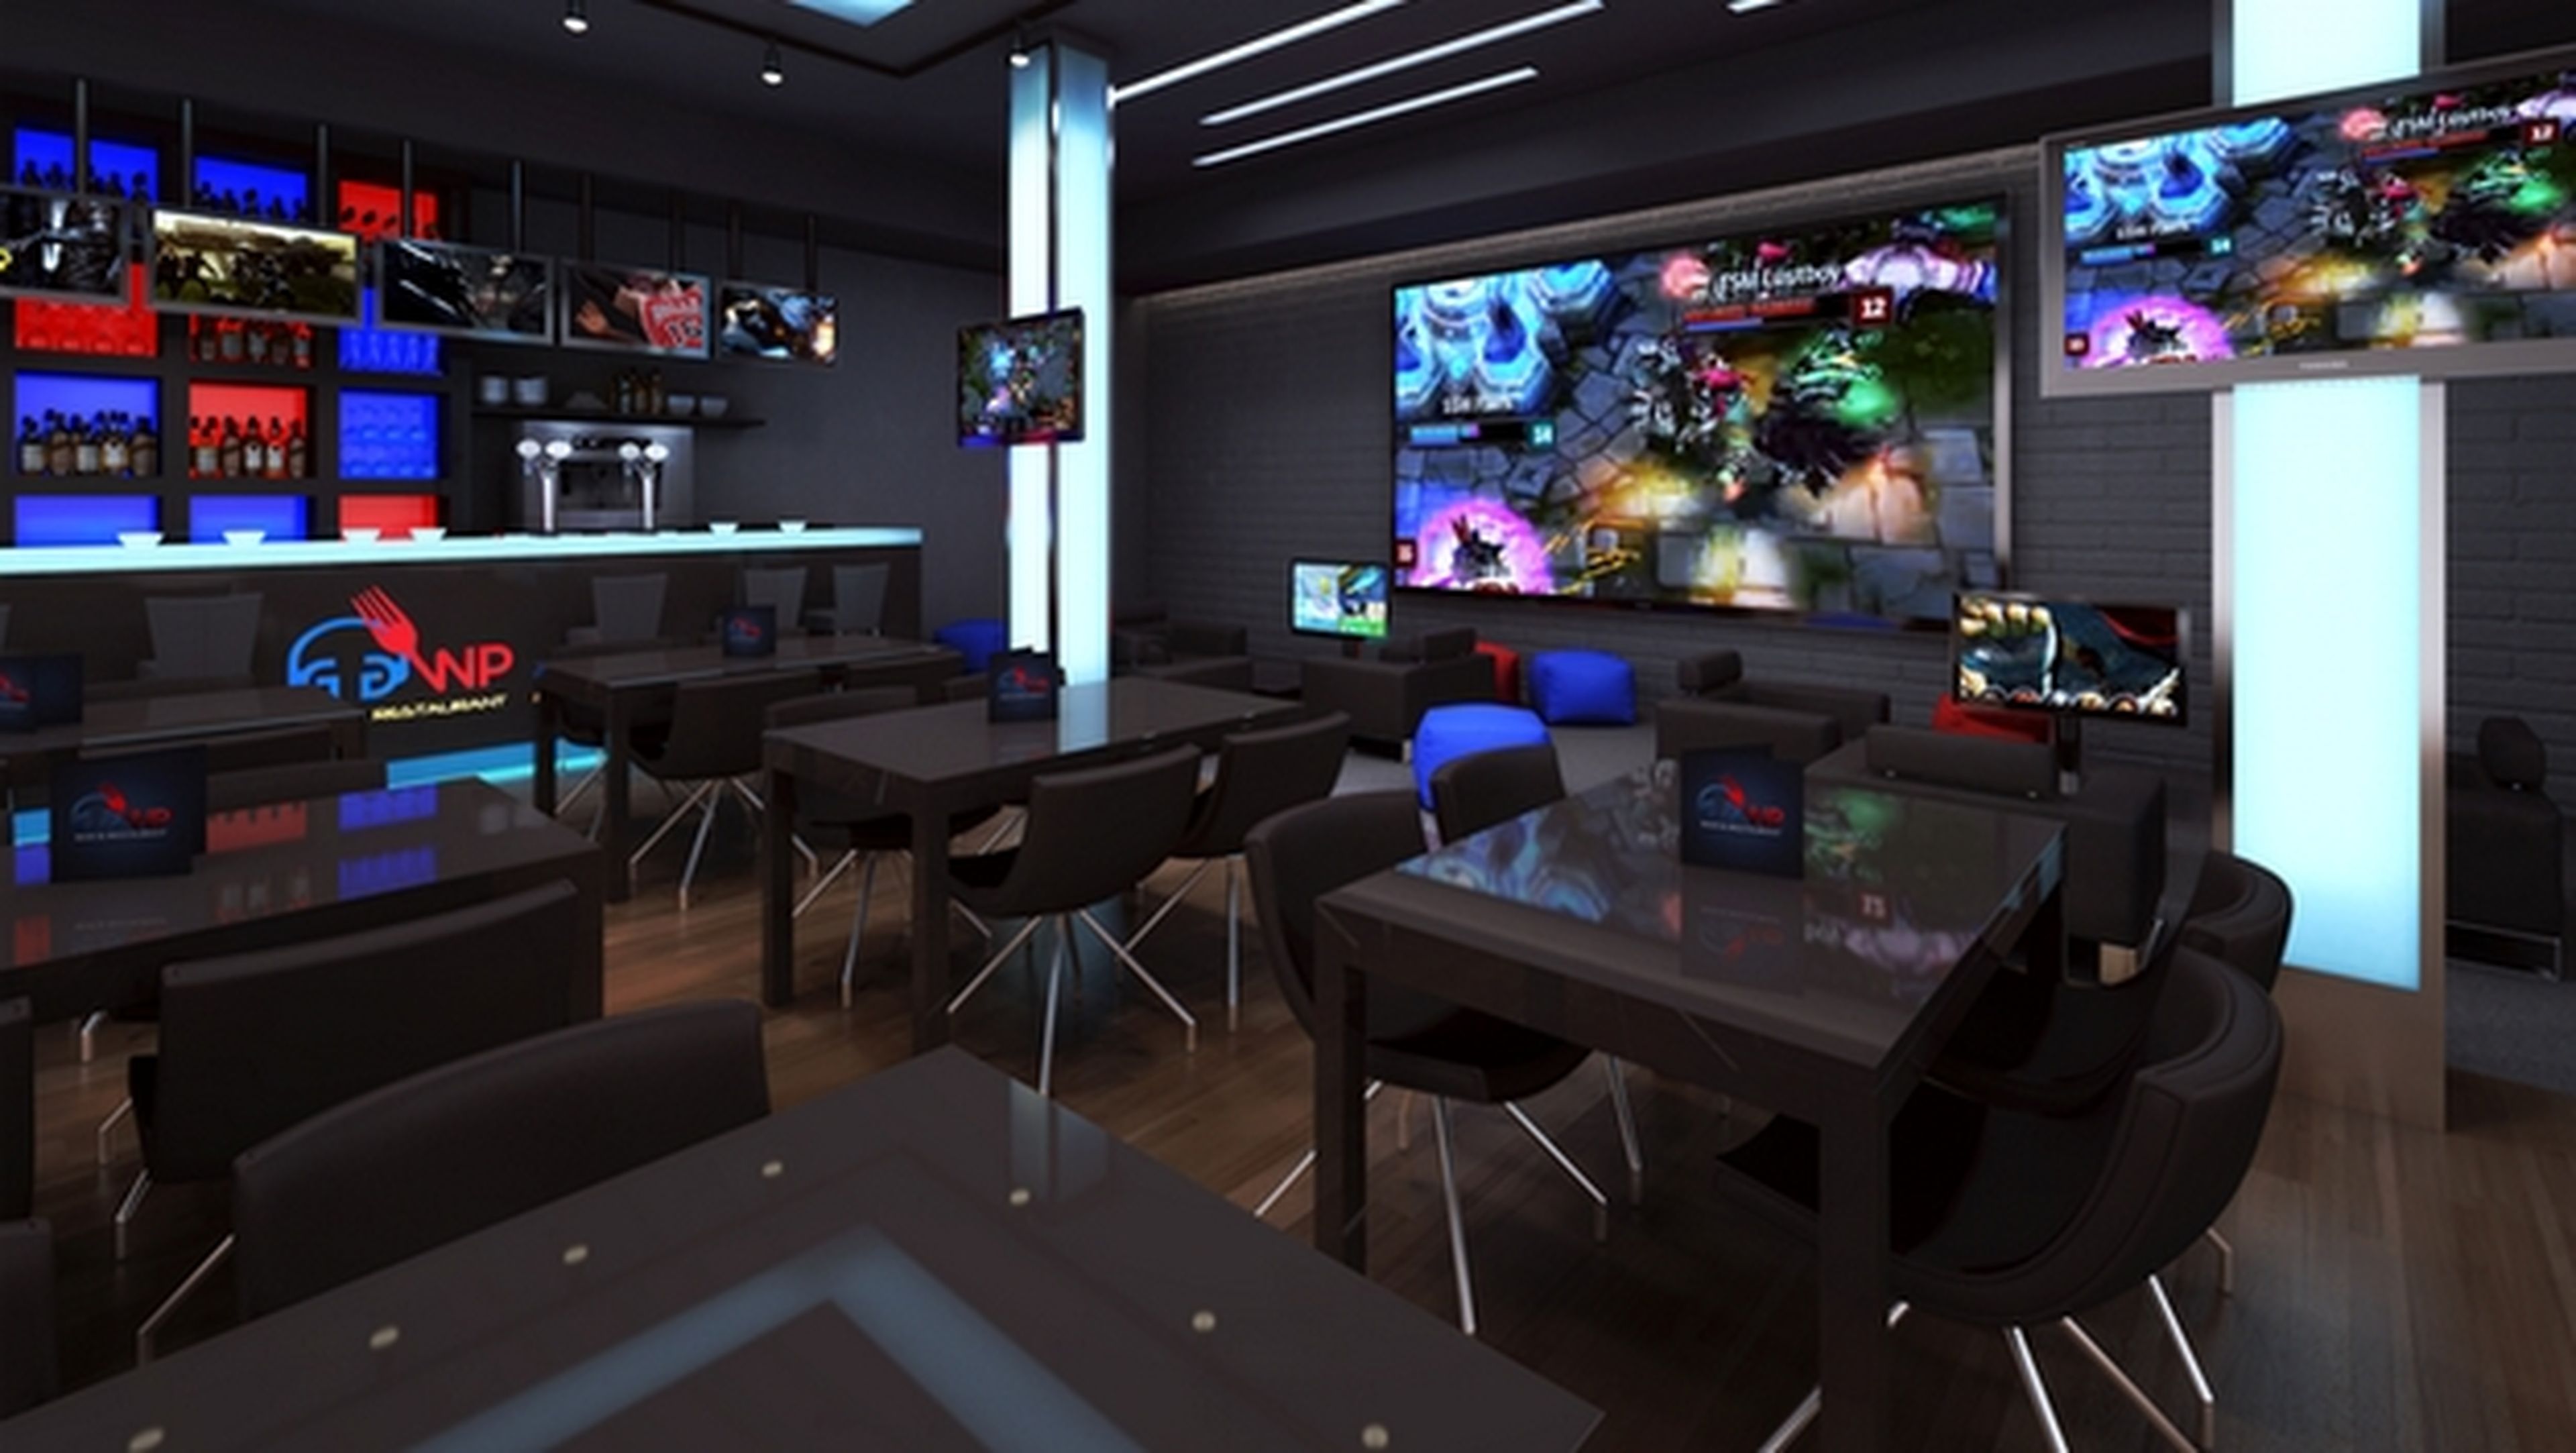 El primer bar restaurante para Gamers, GG WP Bar & Restaurant quiere abrir en Madrid.